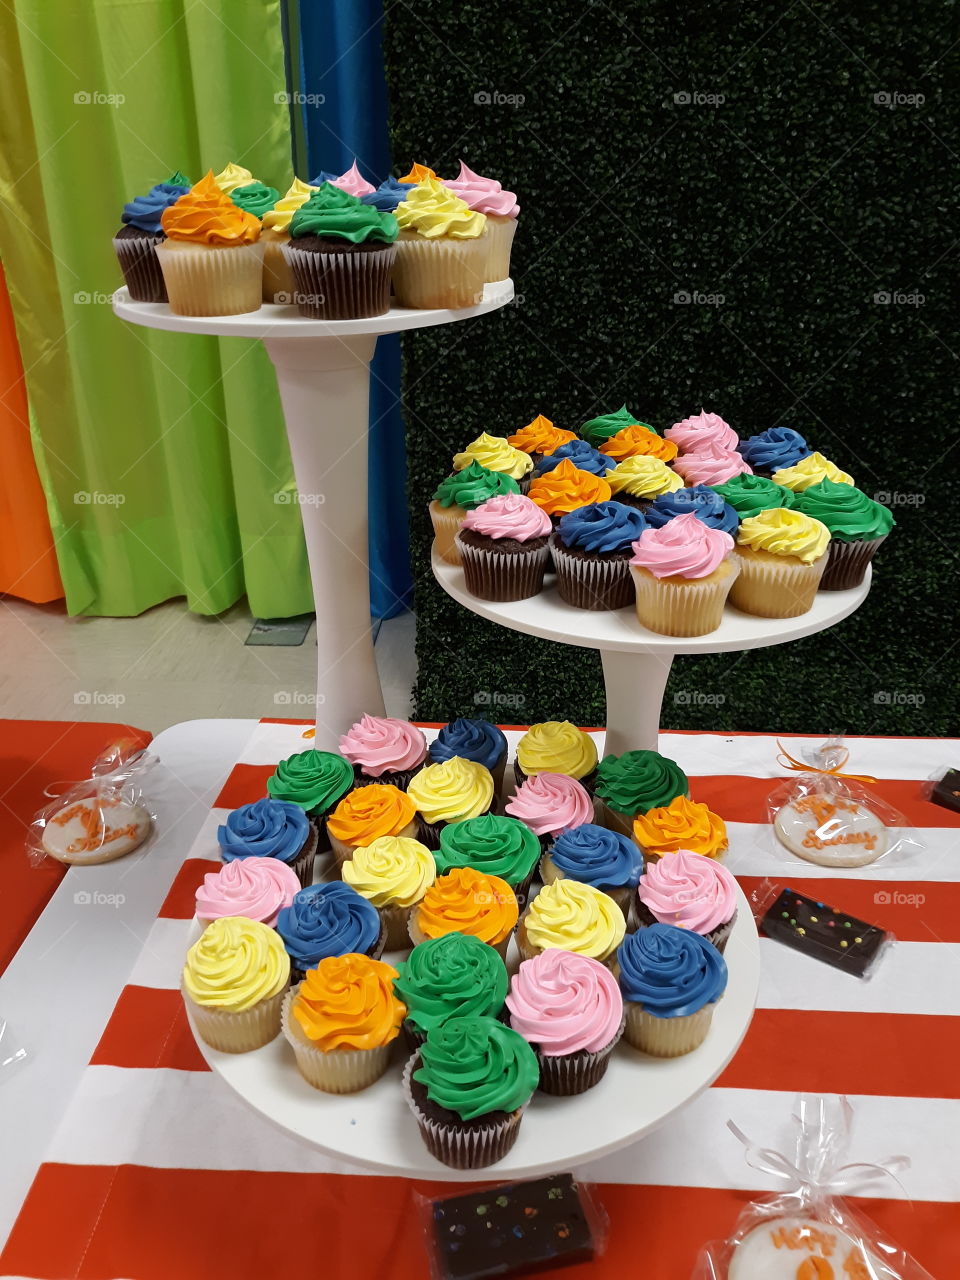 Beautiful, Tasty Cupcake Display!